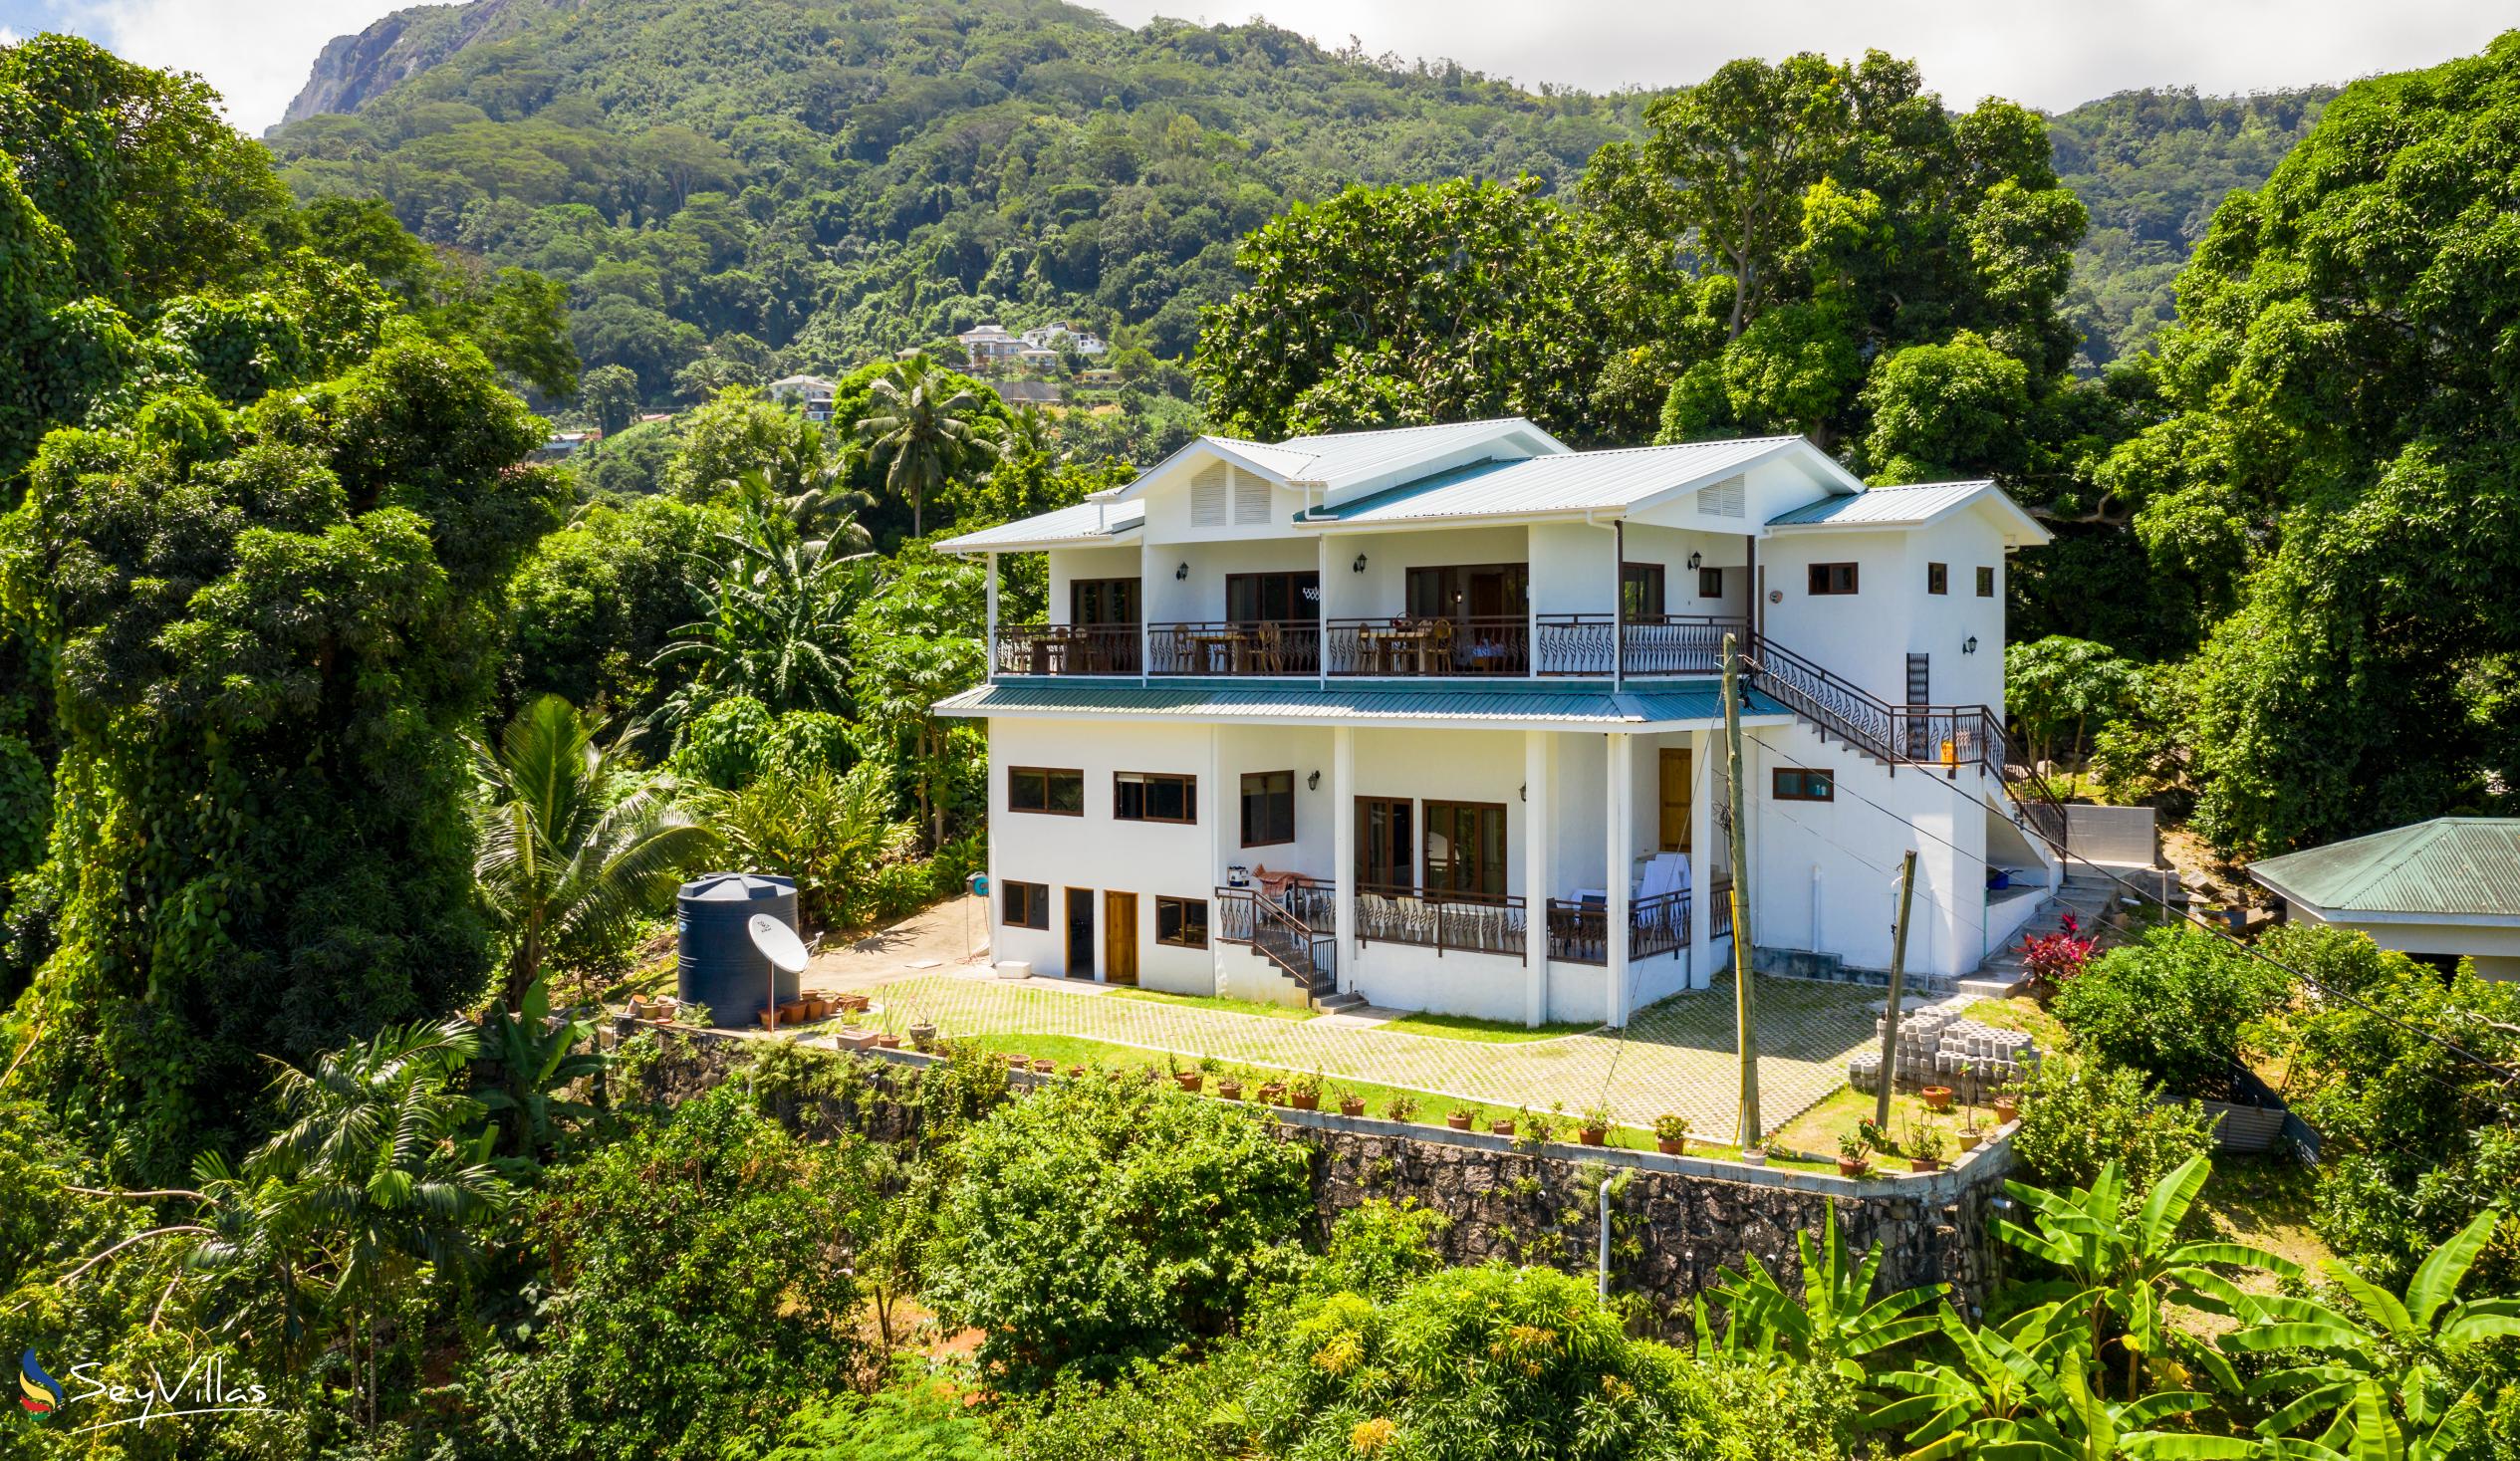 Foto 5: Tama's Holiday Apartments - Aussenbereich - Mahé (Seychellen)